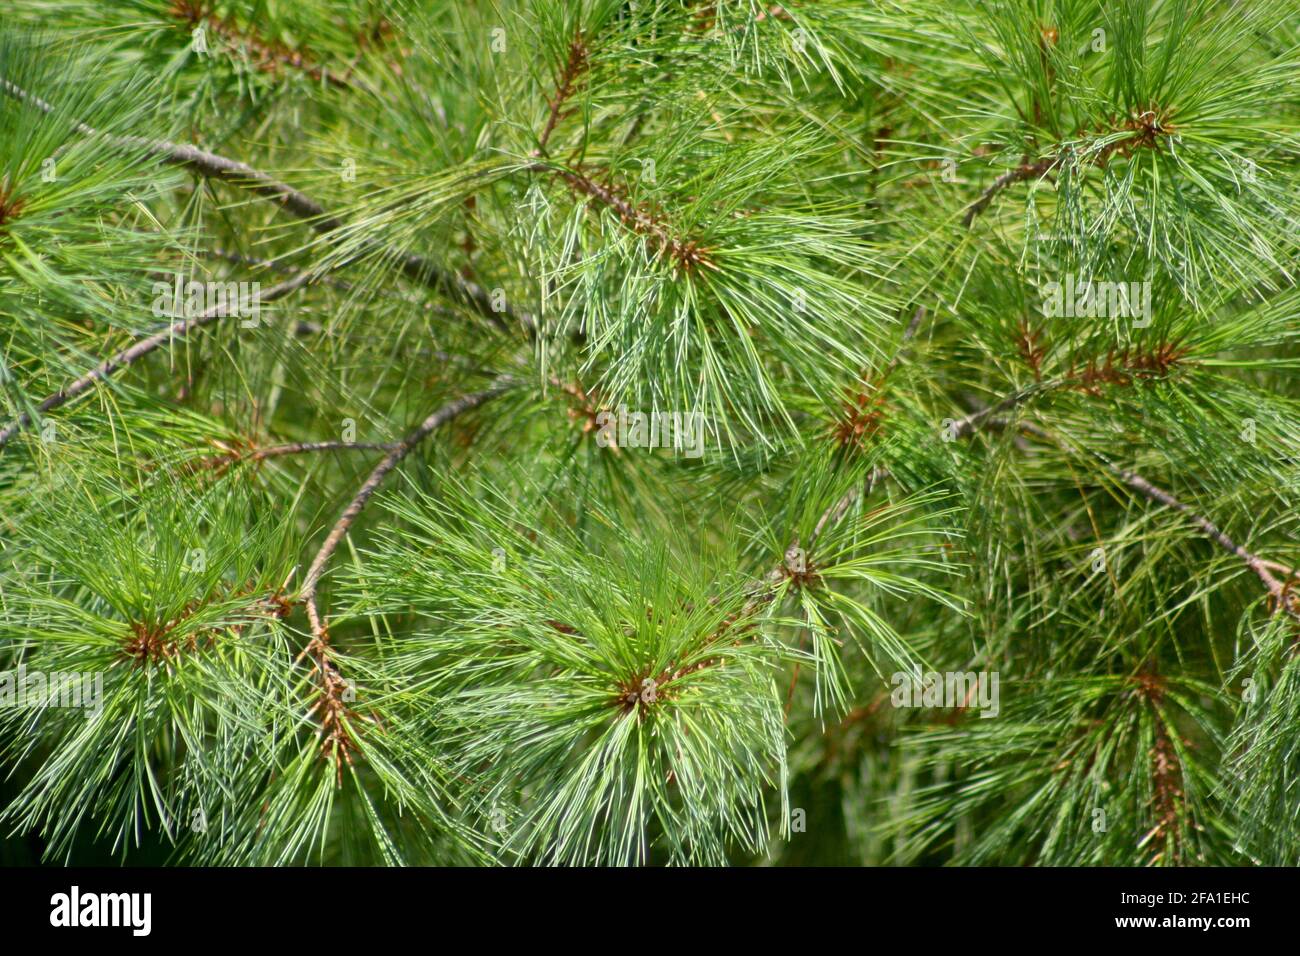 Eastern white pine close-up Stock Photo